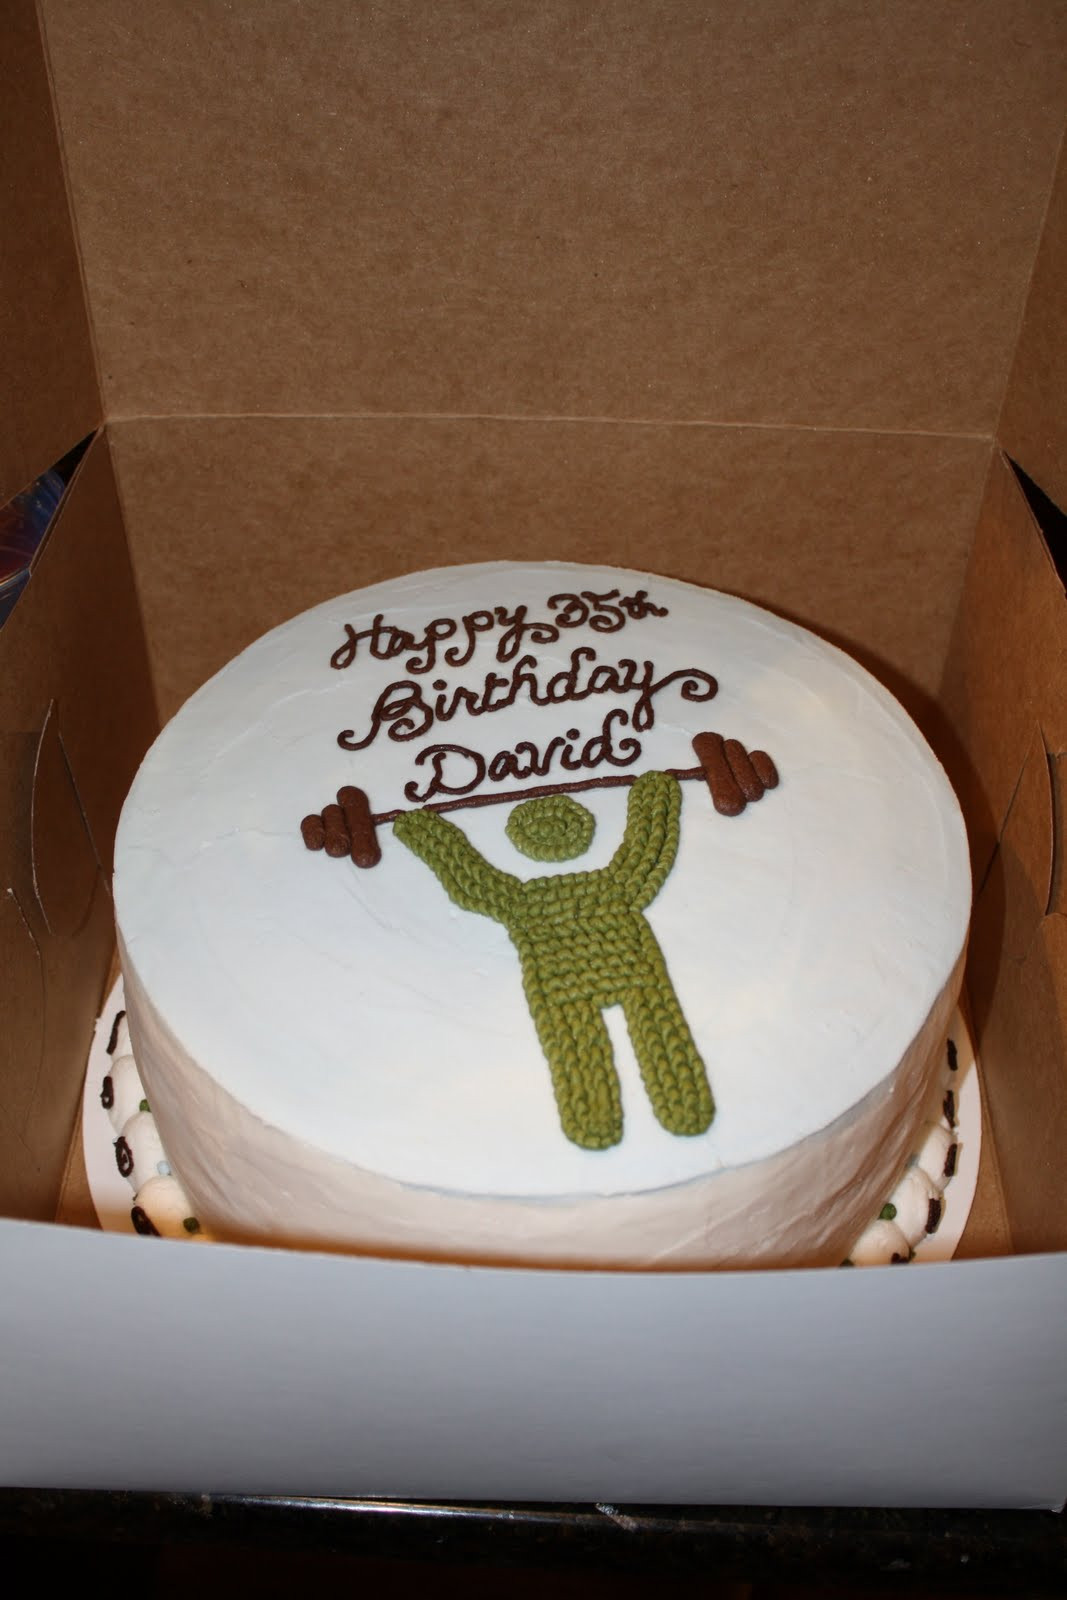 Best ideas about Happy Birthday David Cake
. Save or Pin The Metzner Family Happy Birthday David Now.